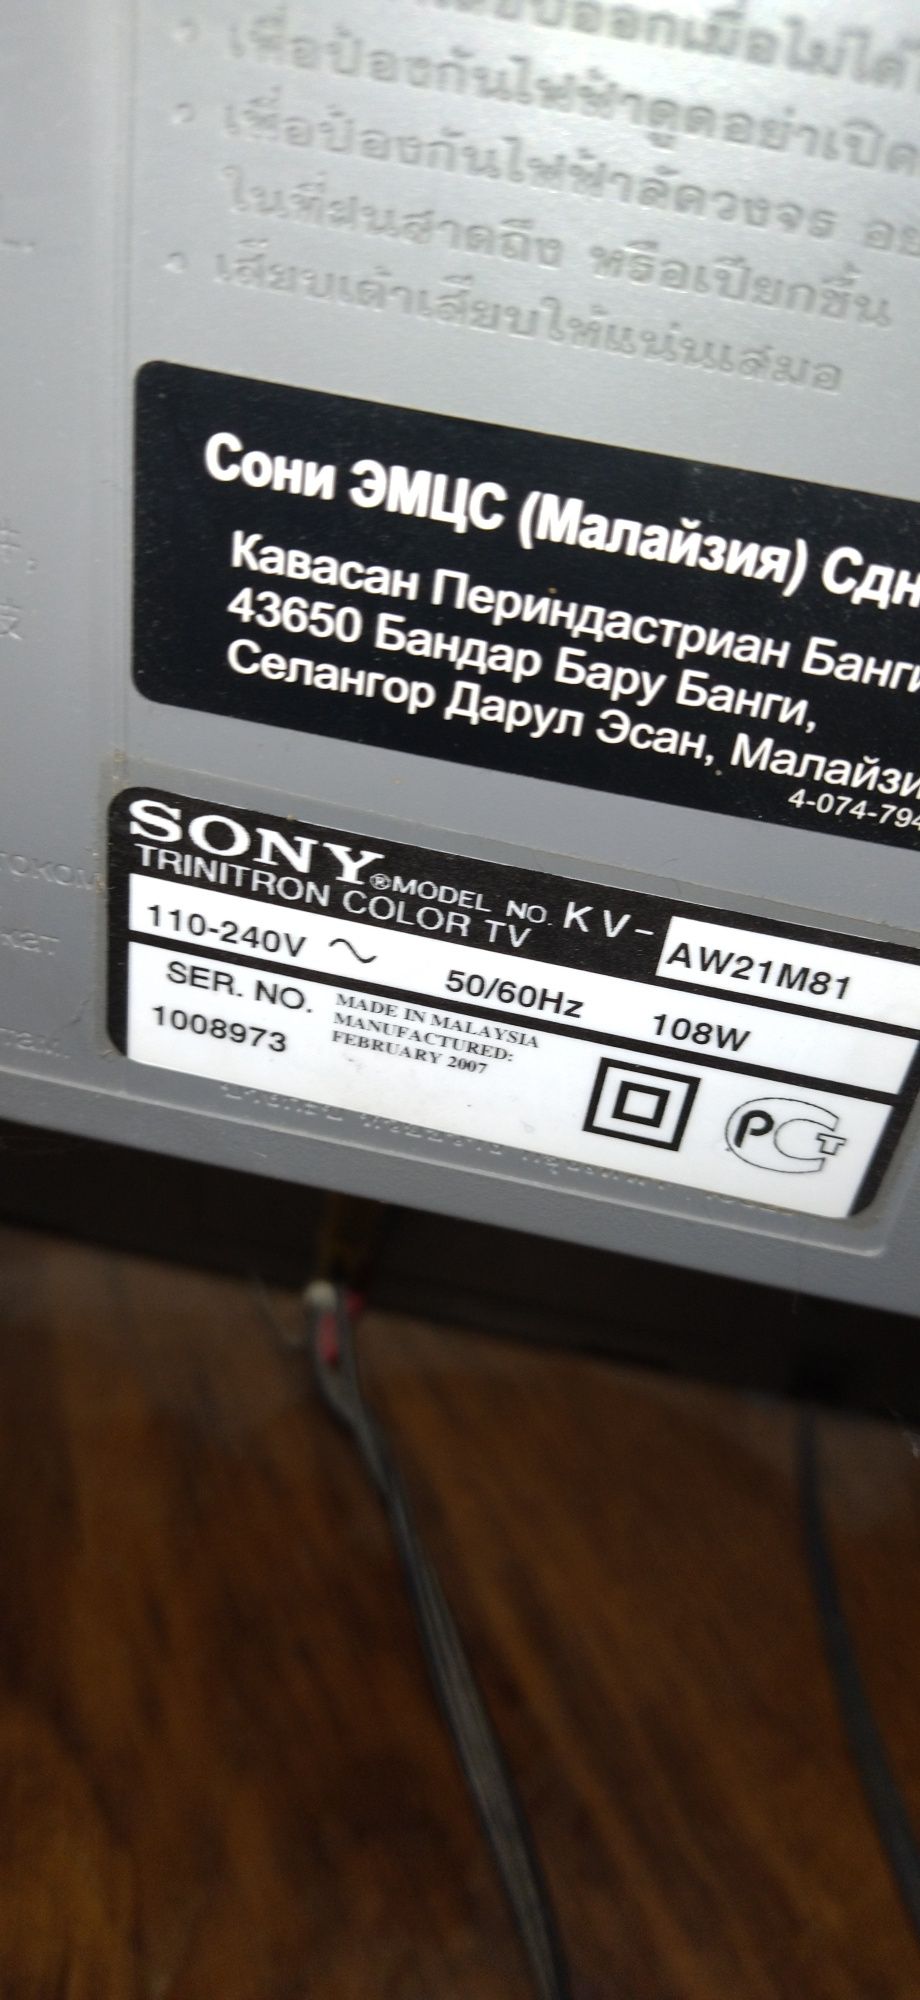 Продам Телевизор Sony KV-AW21M81